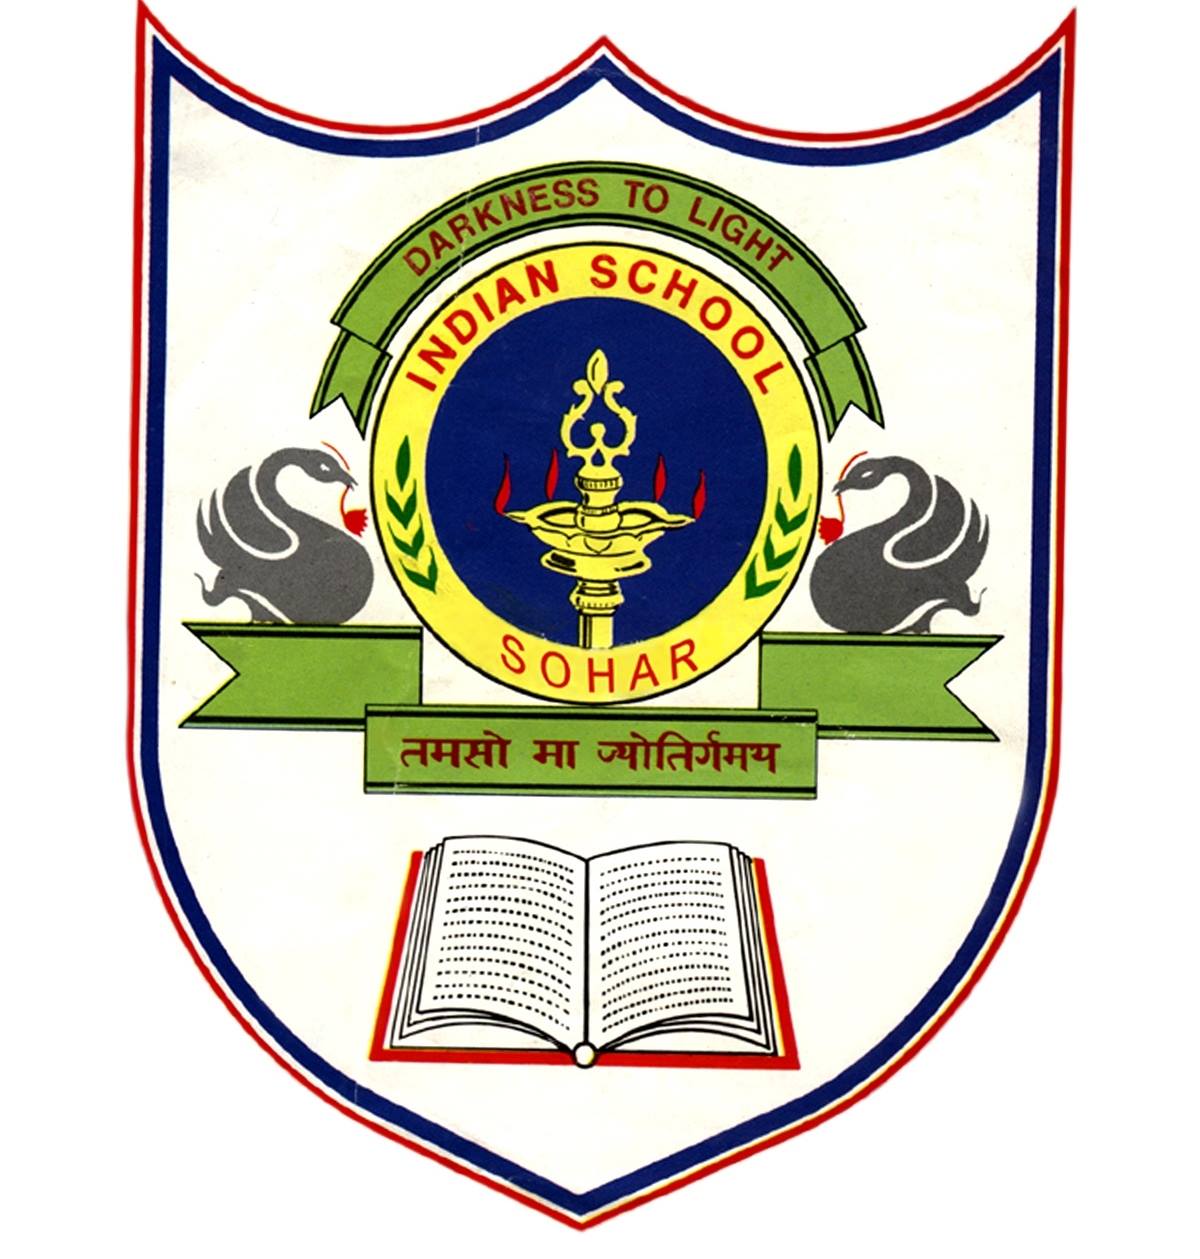 Indian School Sohar